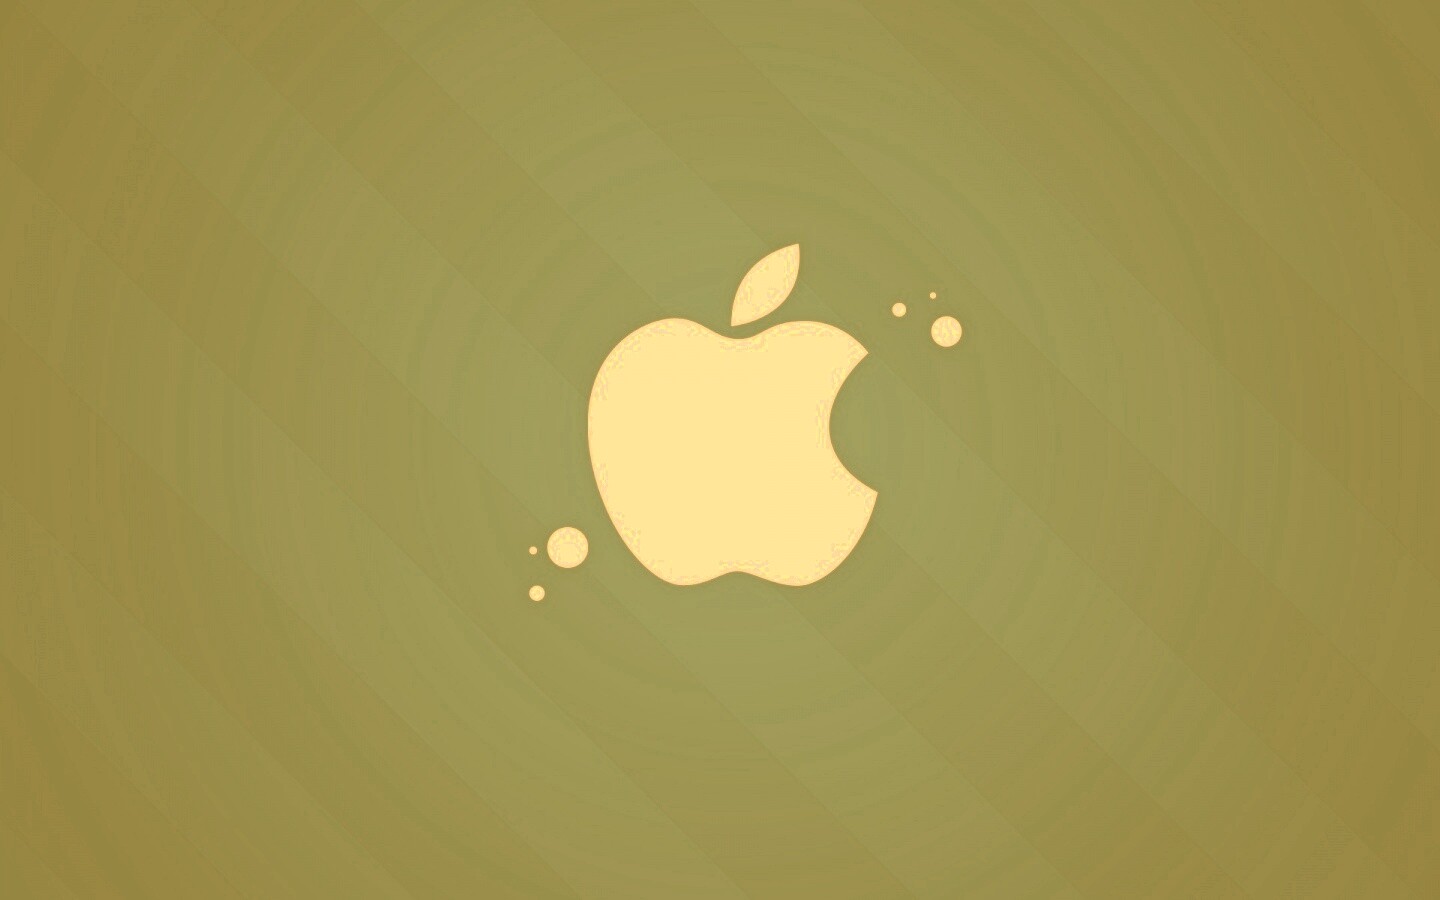 Логотип Apple на фоне голубых полос обои